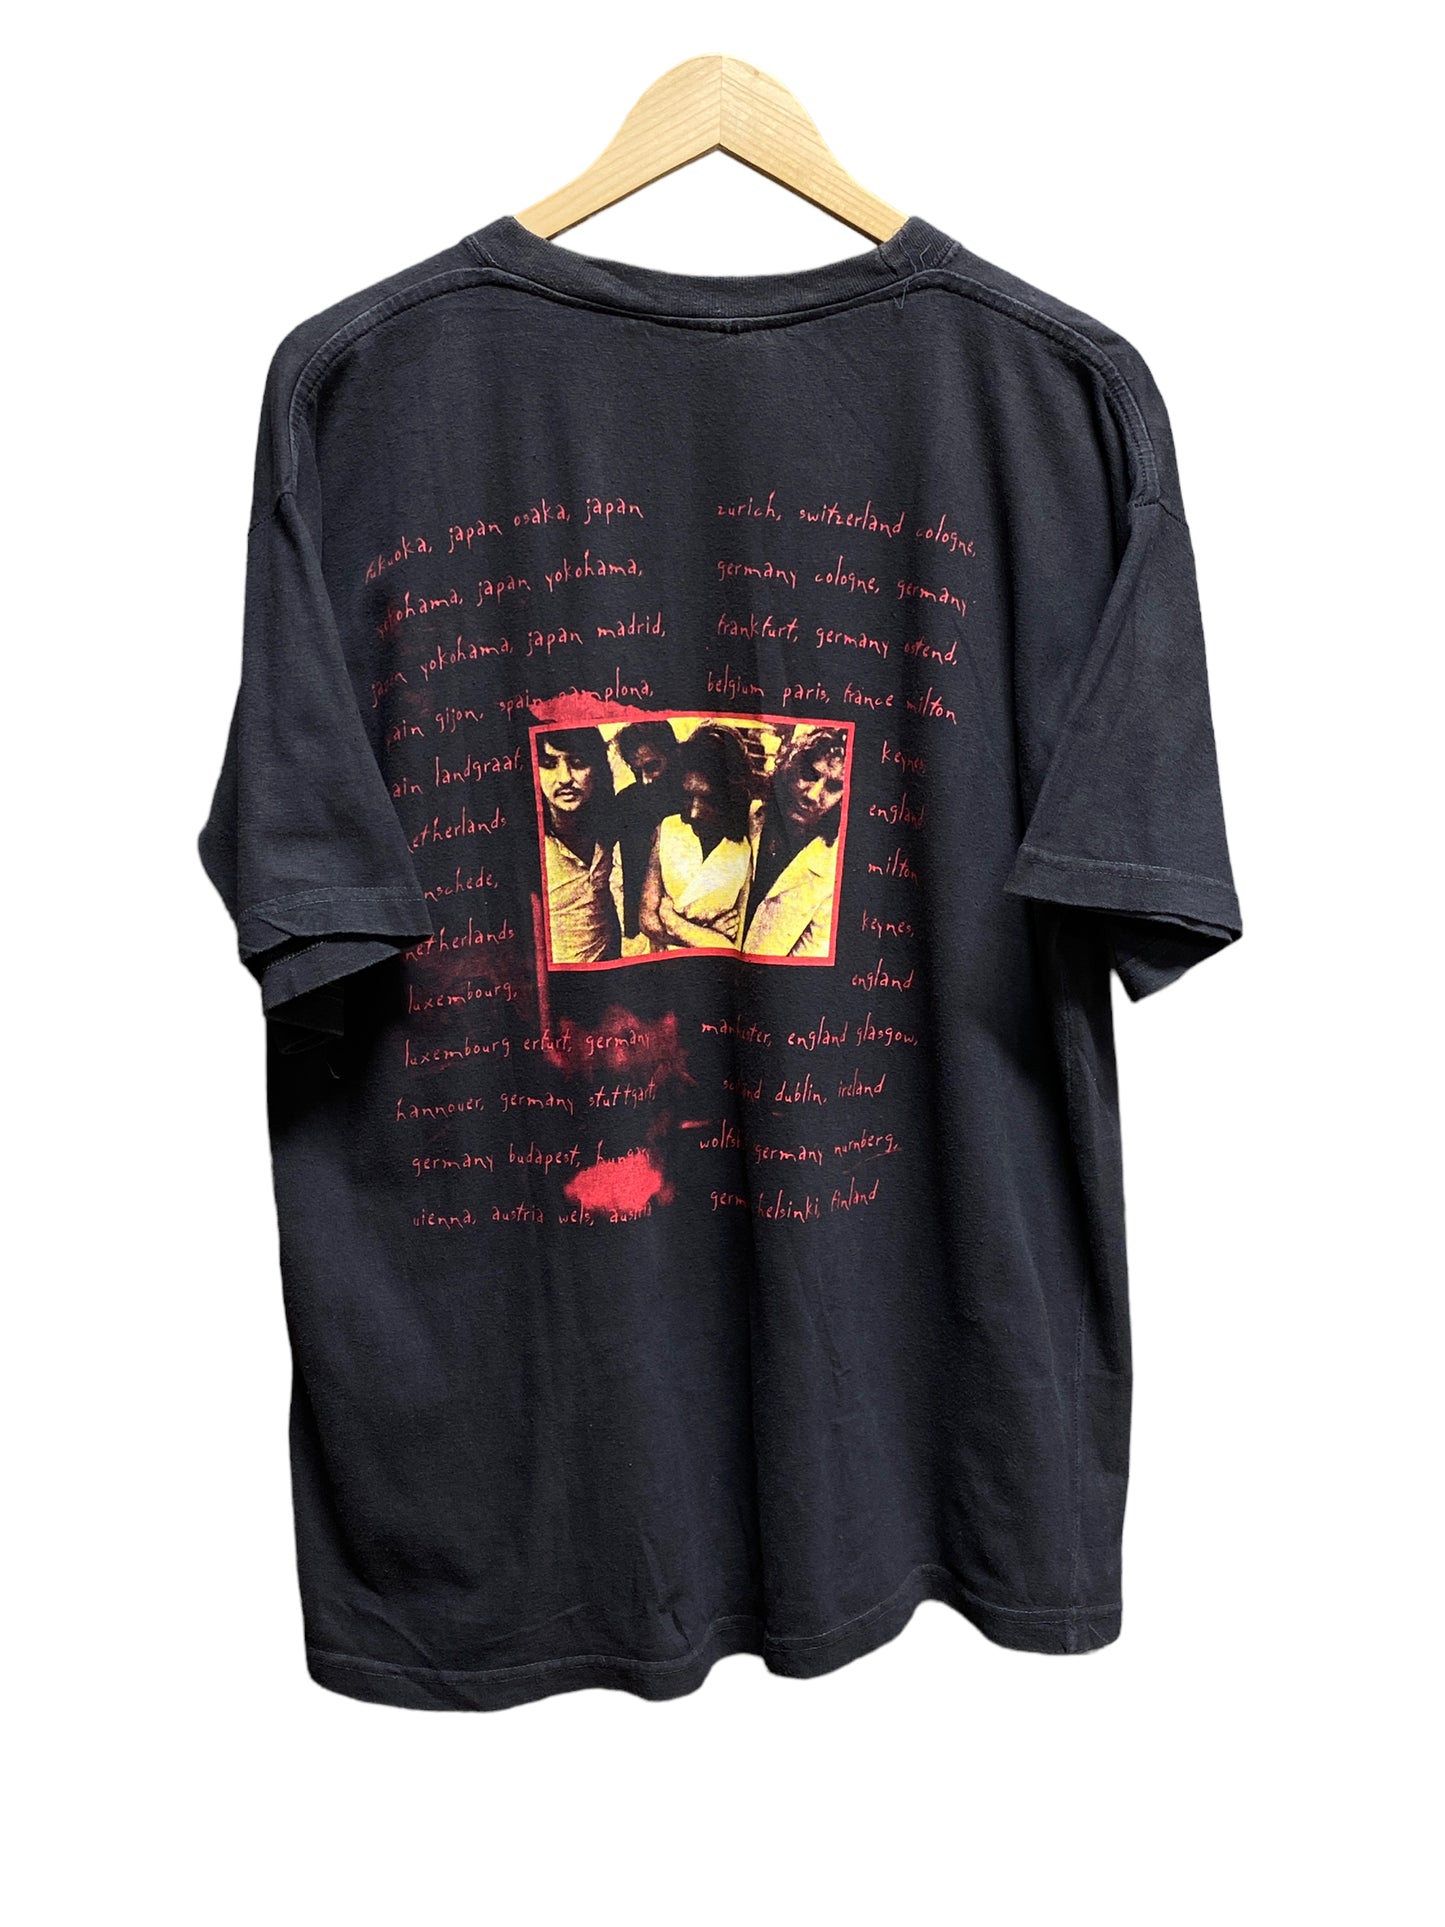 Vintage 1996 Brockum Bon Jovi These Days Tour Tee Size L/XL